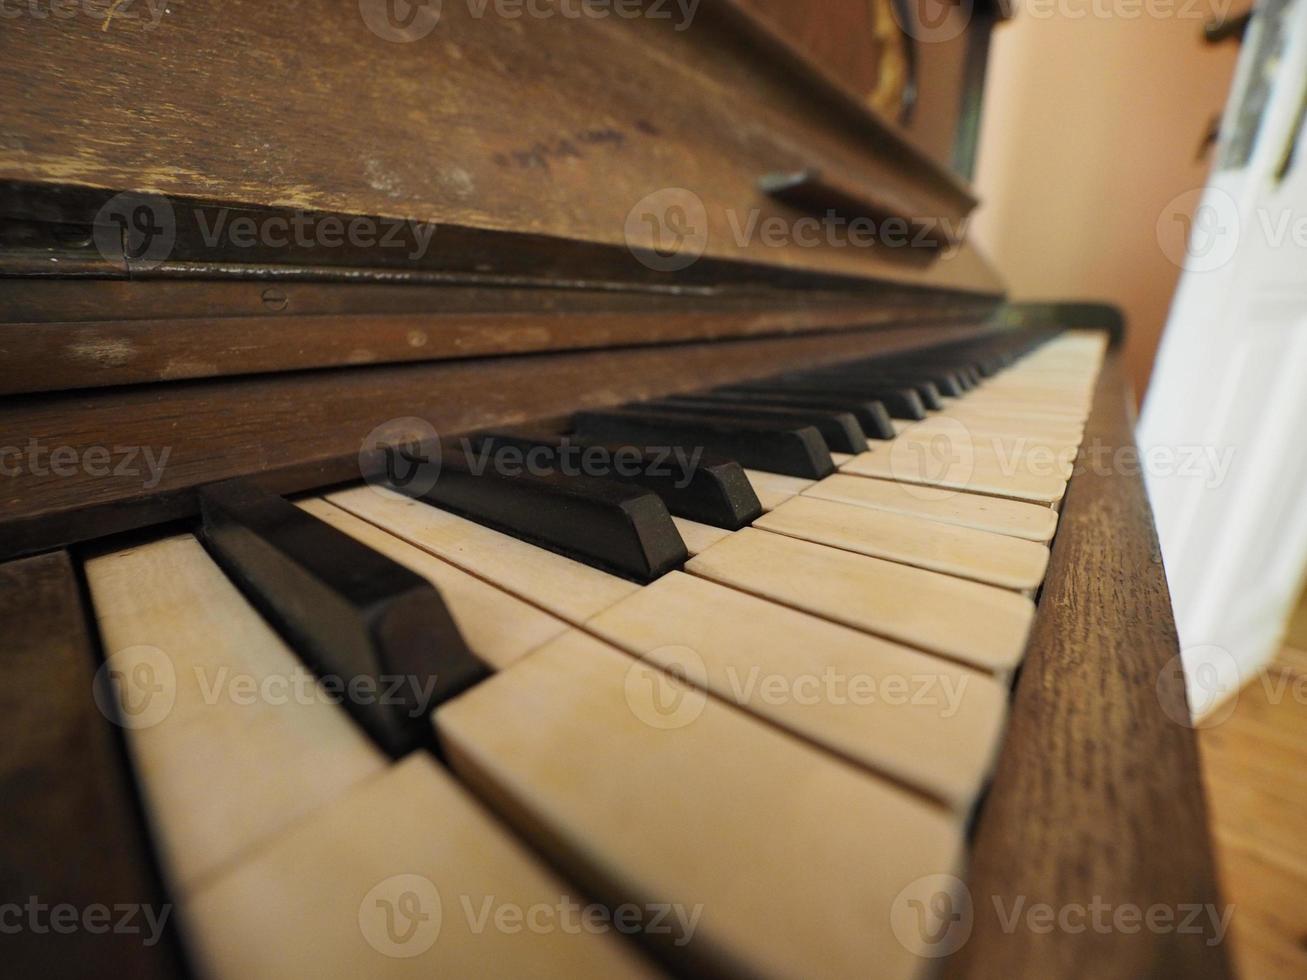 Vintage Klavier, Musikinstrument foto